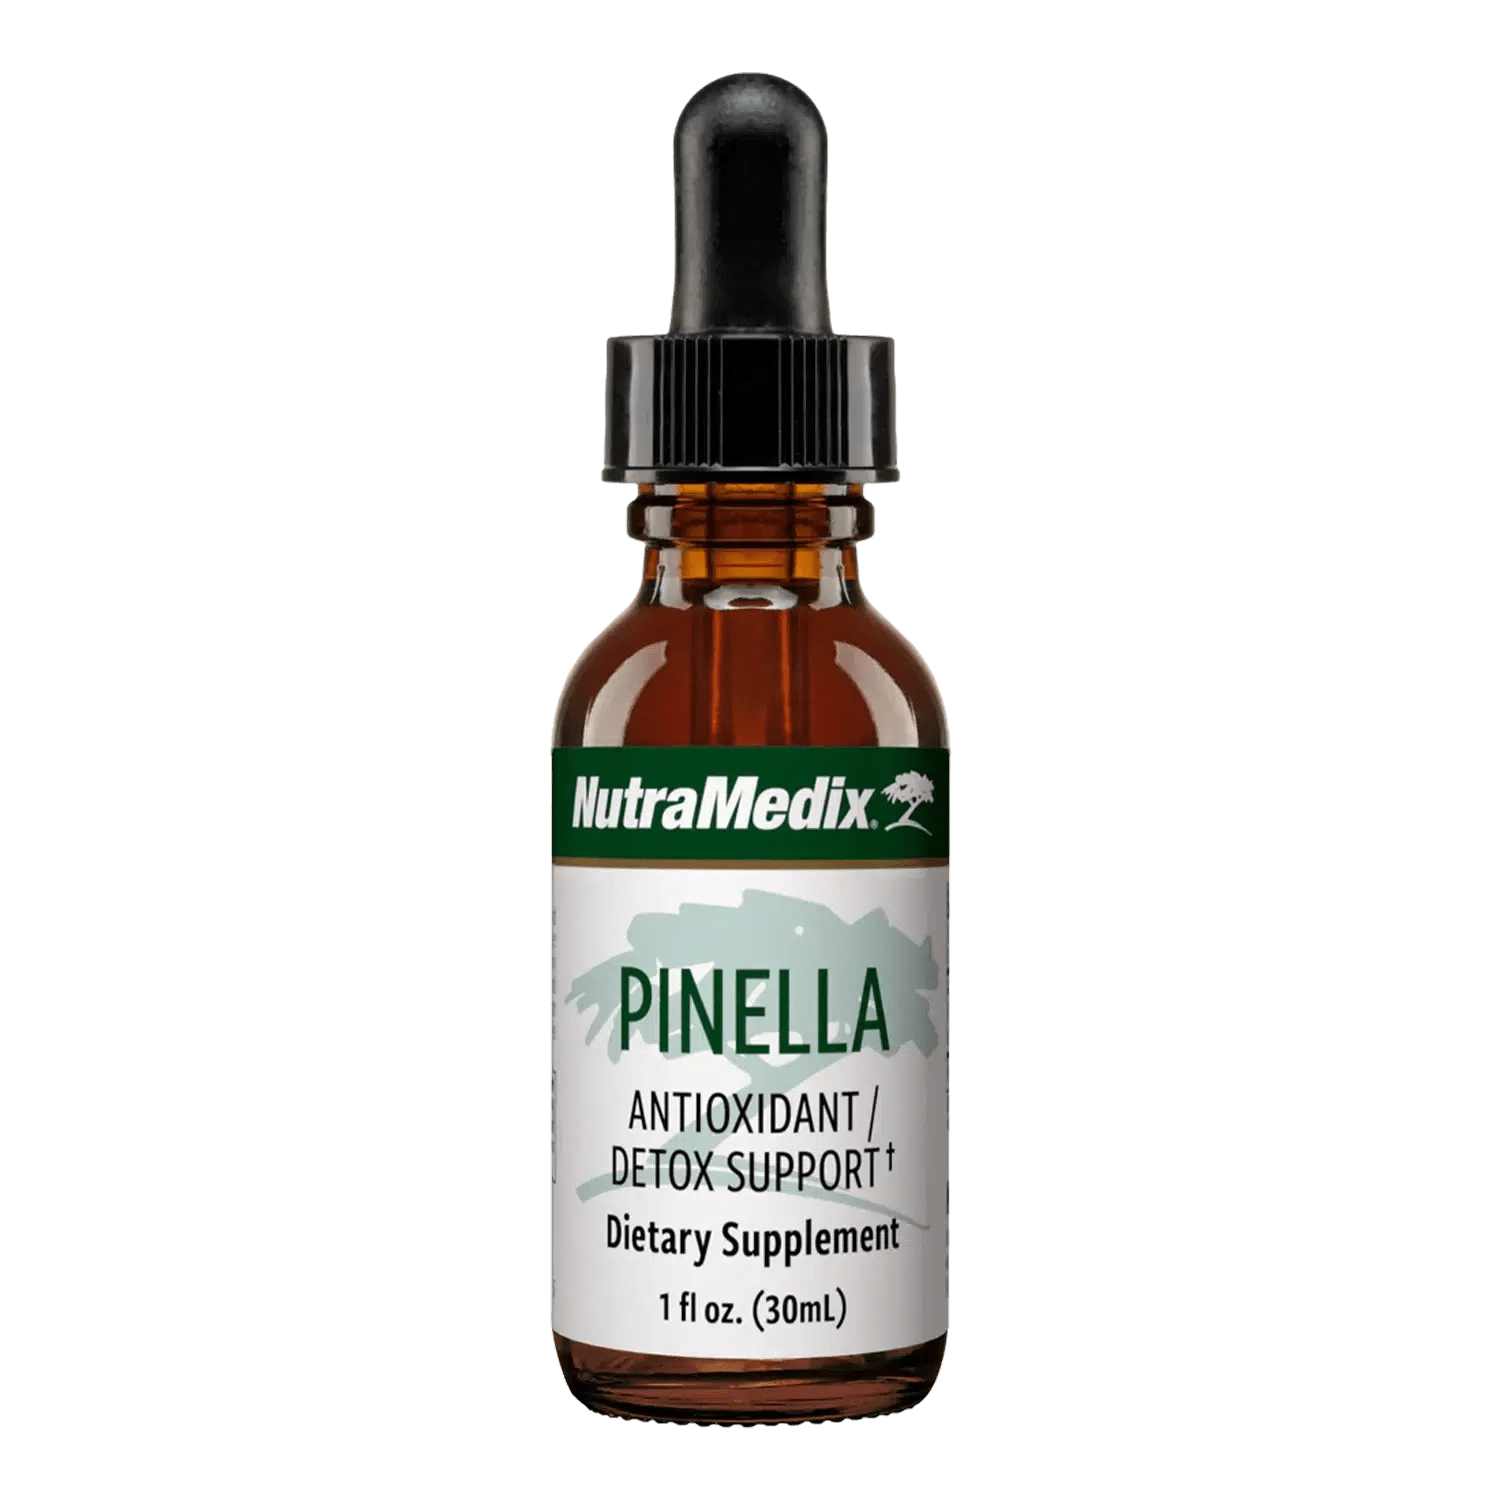 Nutramedix Pinella liquid supplement - natural brain detox support supplement